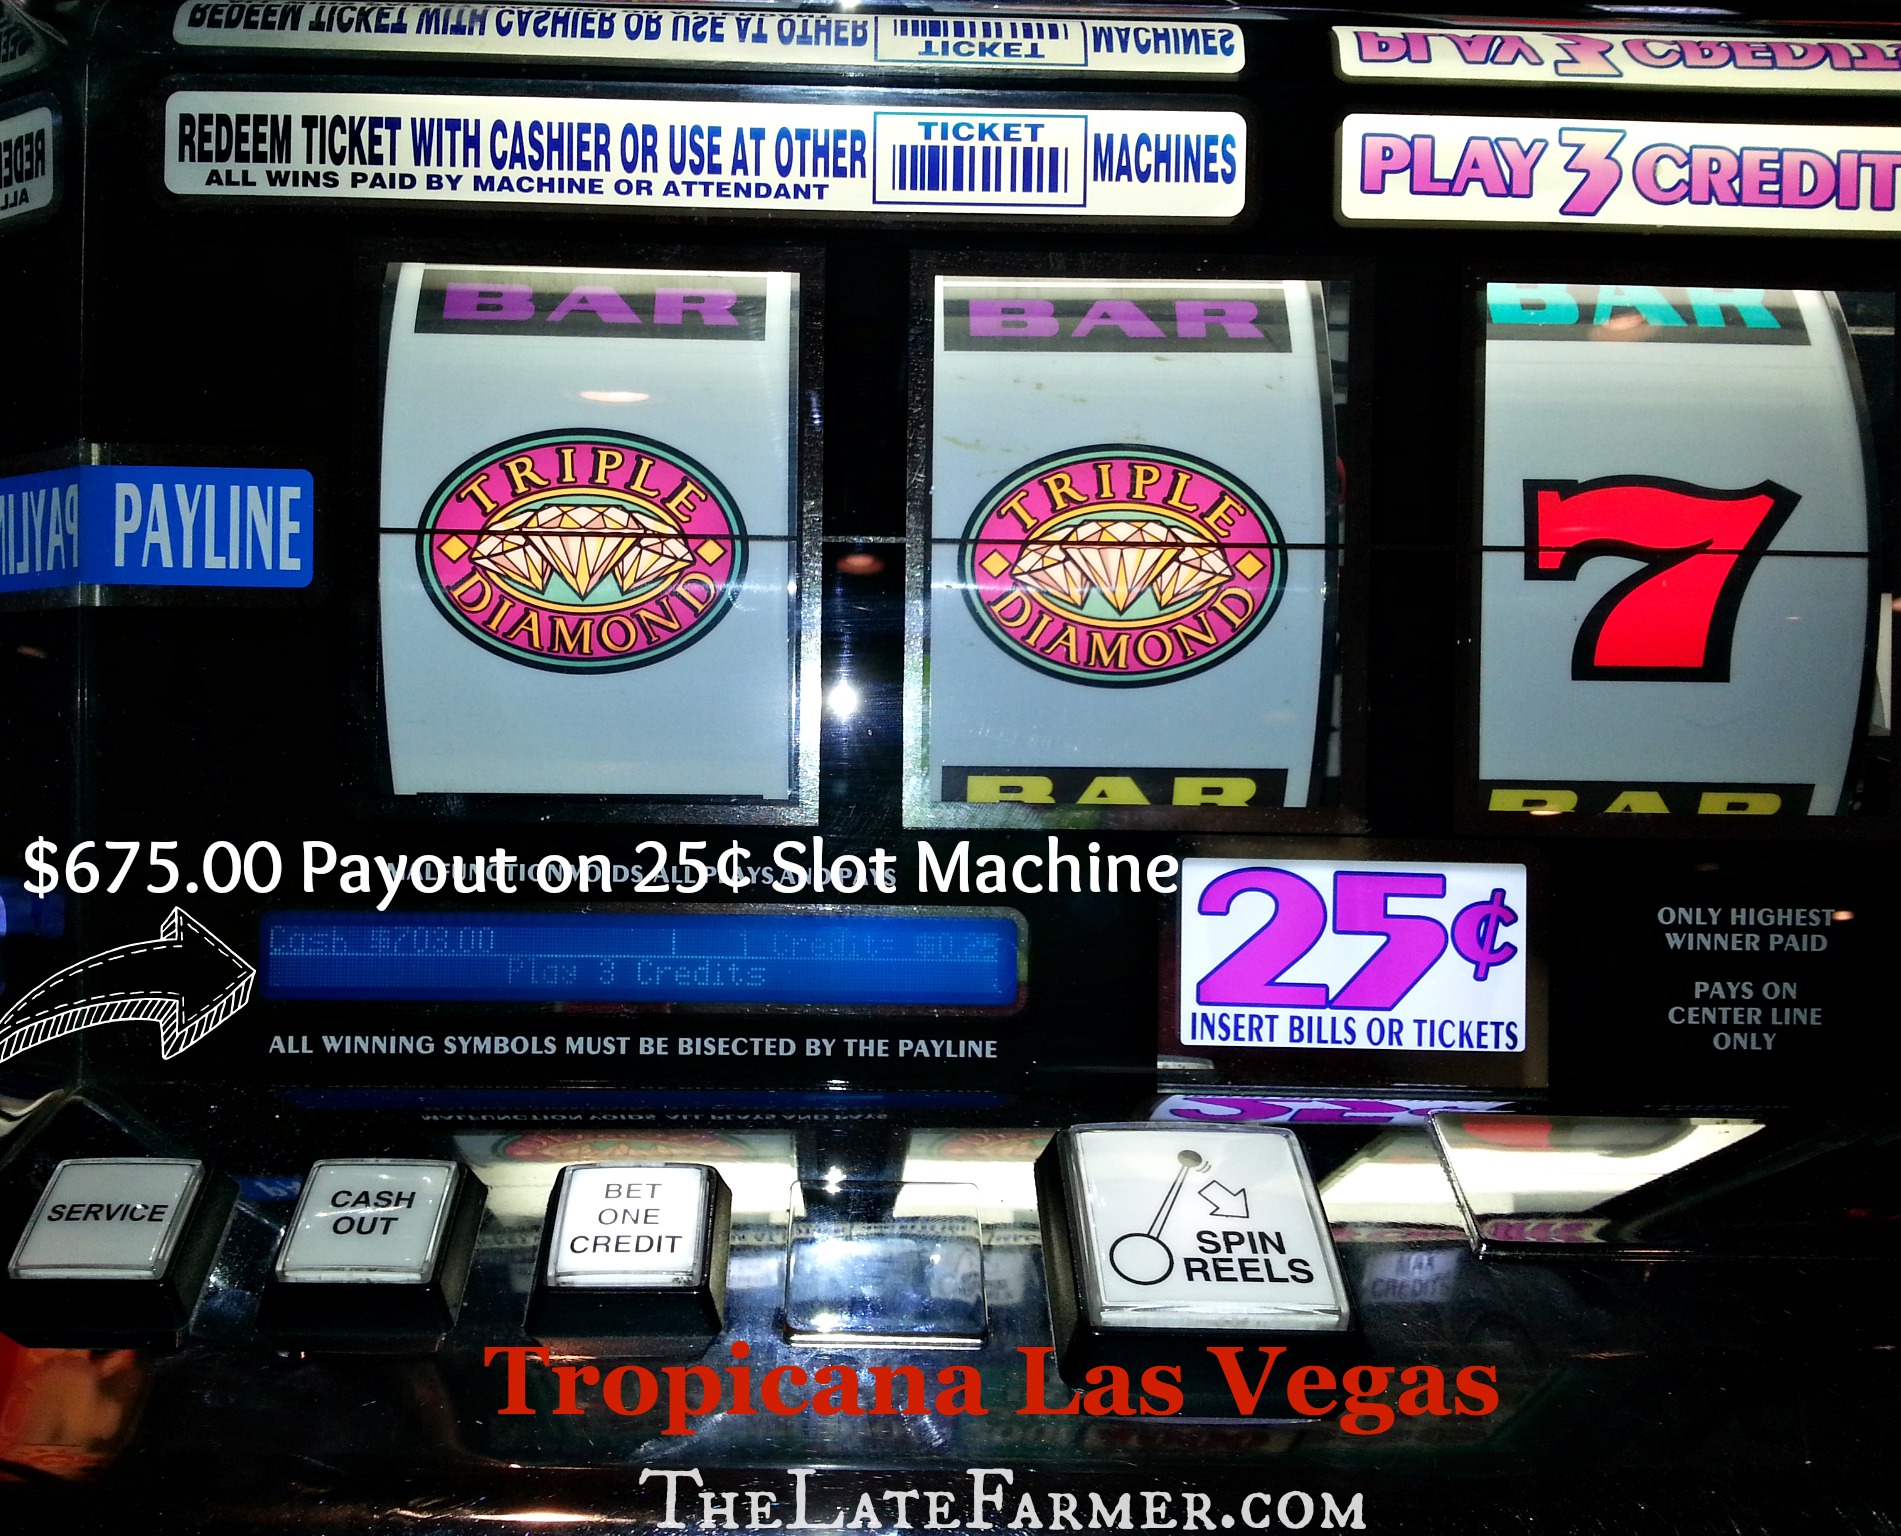 Casino fiesta slot Cirrus Casin 854405